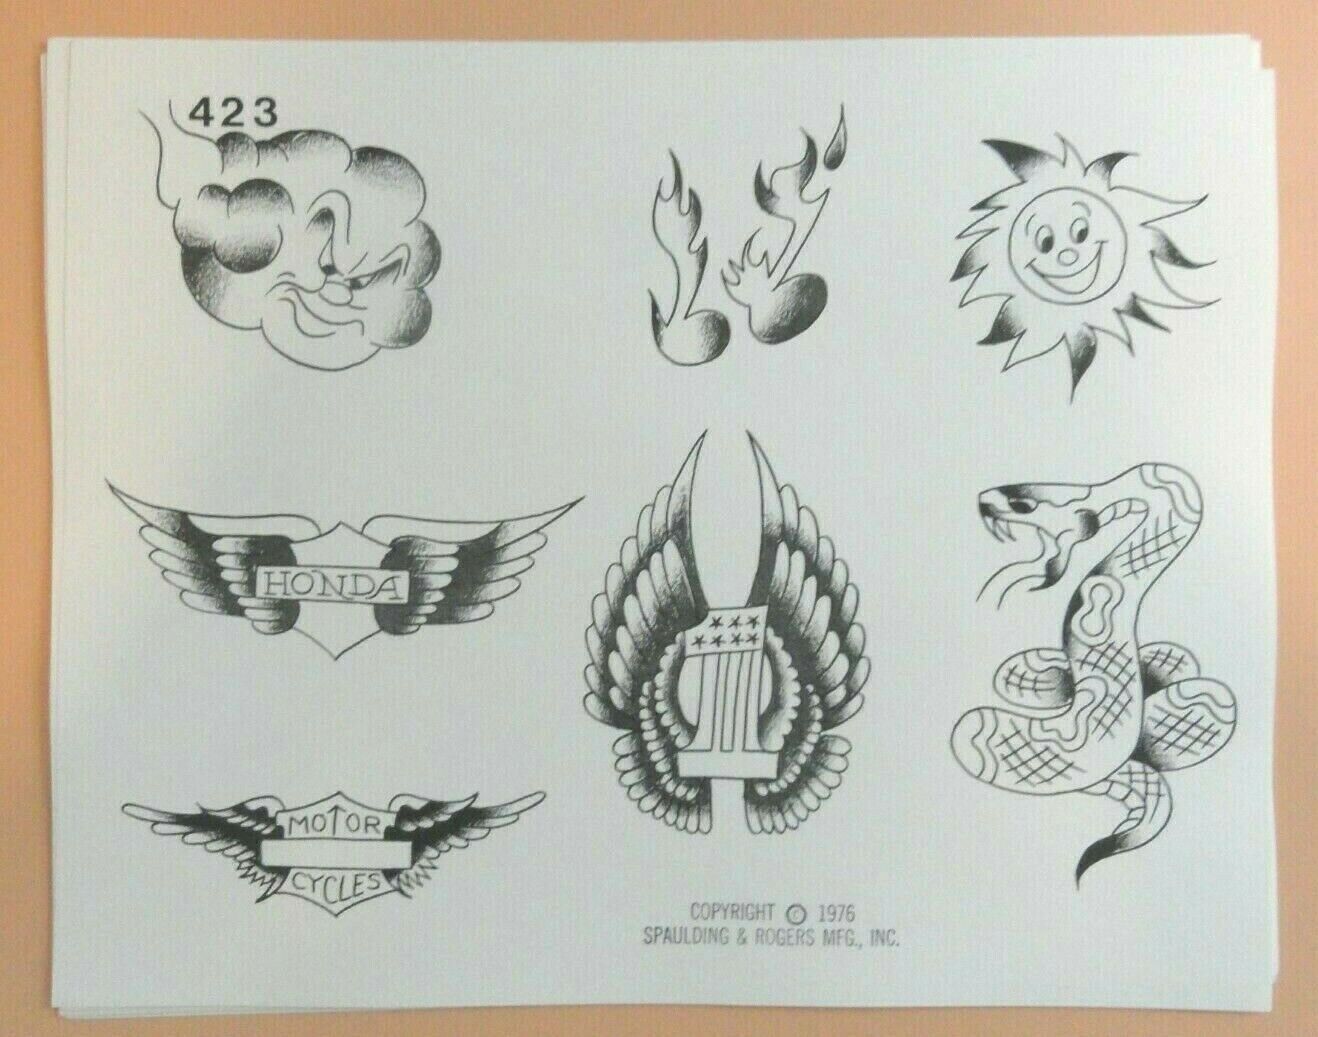 Vintage RARE 1976 Spaulding & Rogers Tattoo Flash Sheet #423 Harley Honda Snake